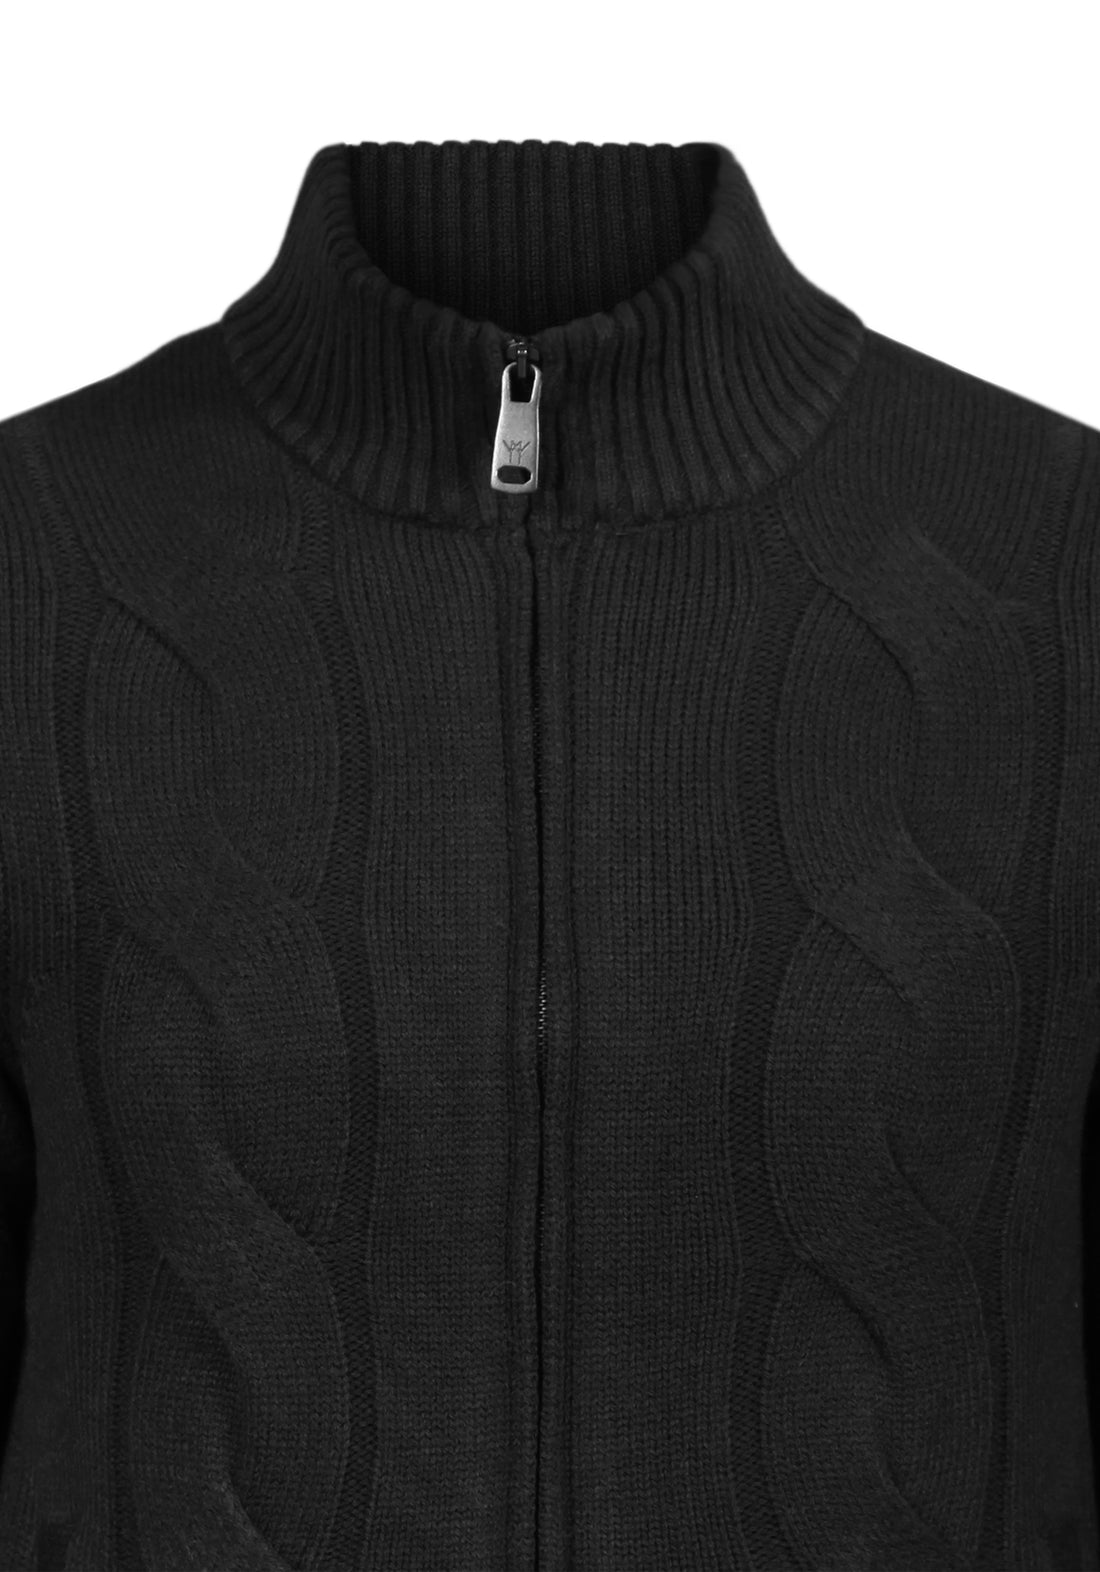 Braided sweater with internal fur - Black